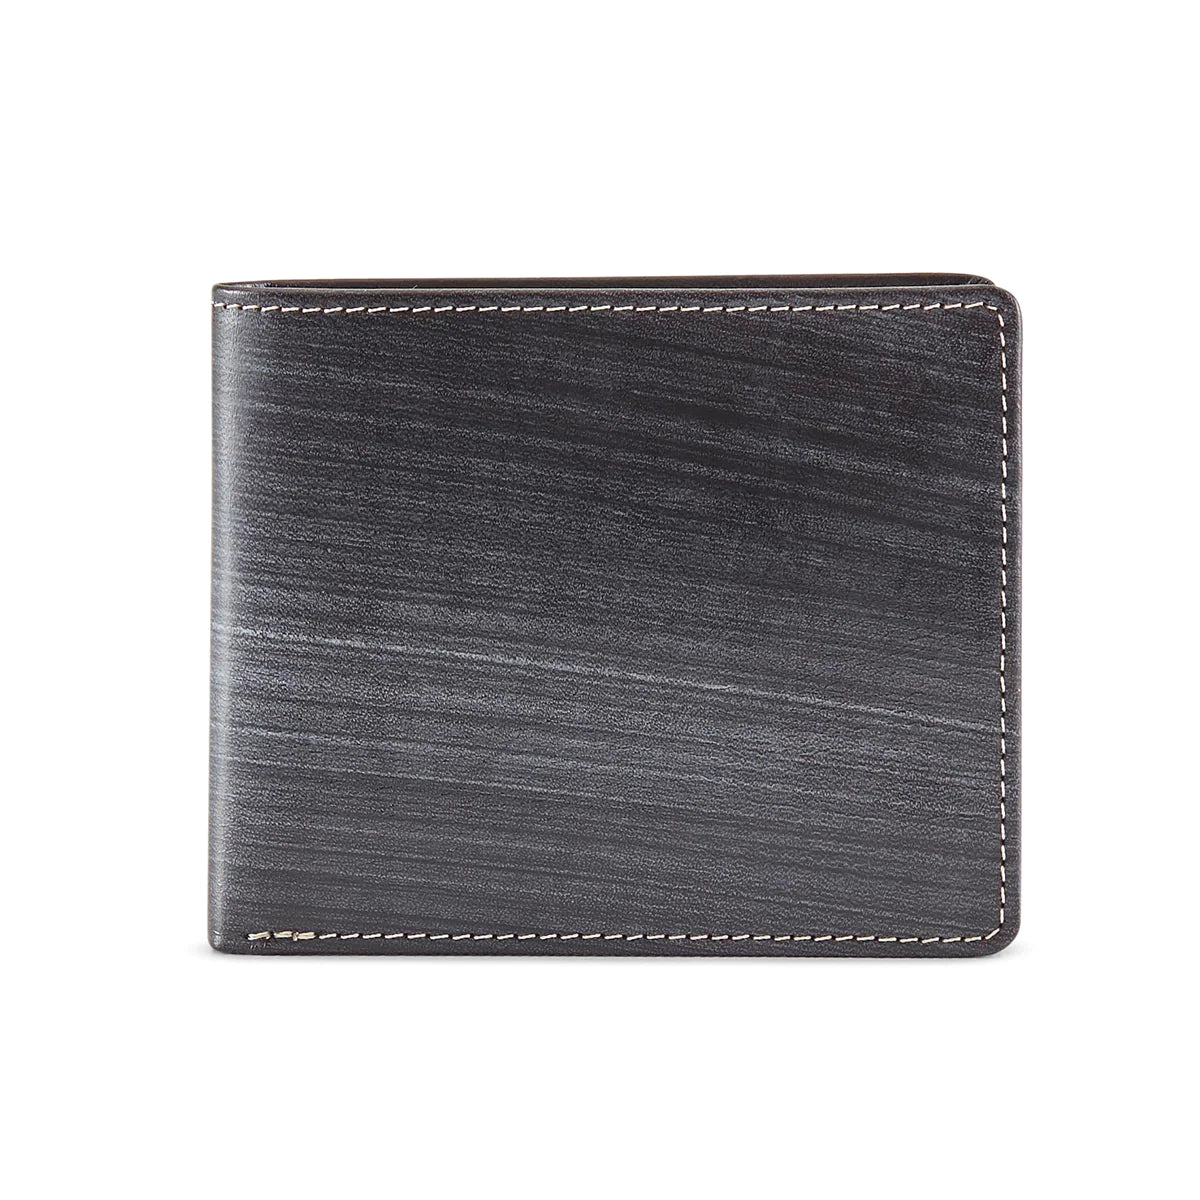 Osgoode Marley Leather RFID Brushed ULTRA MINI Wallet